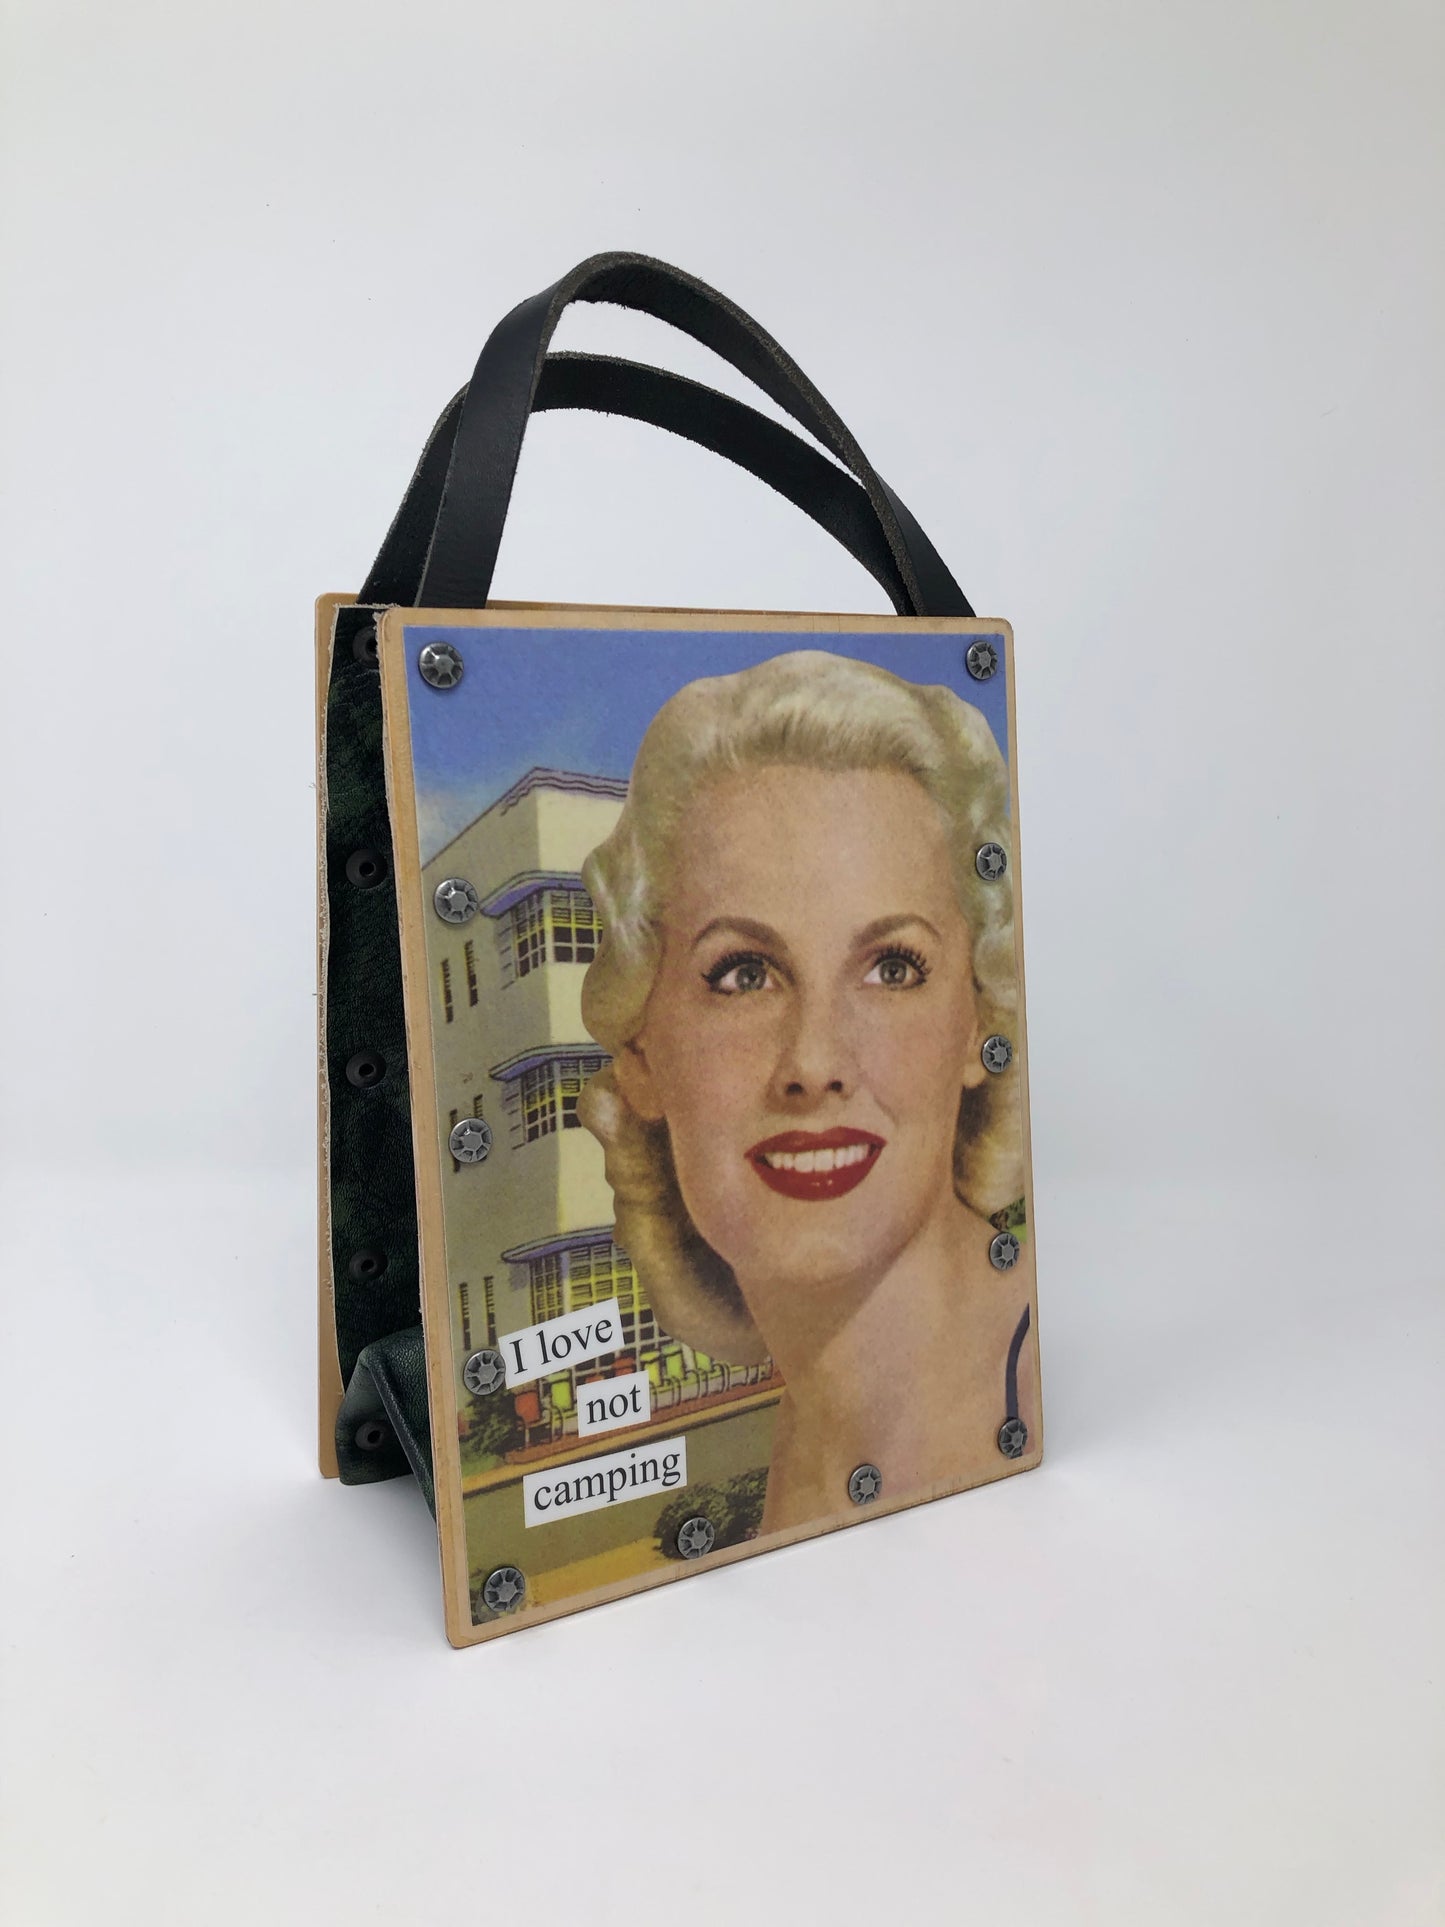 Vintage Modern Woman Handbag - I Love not Camping!